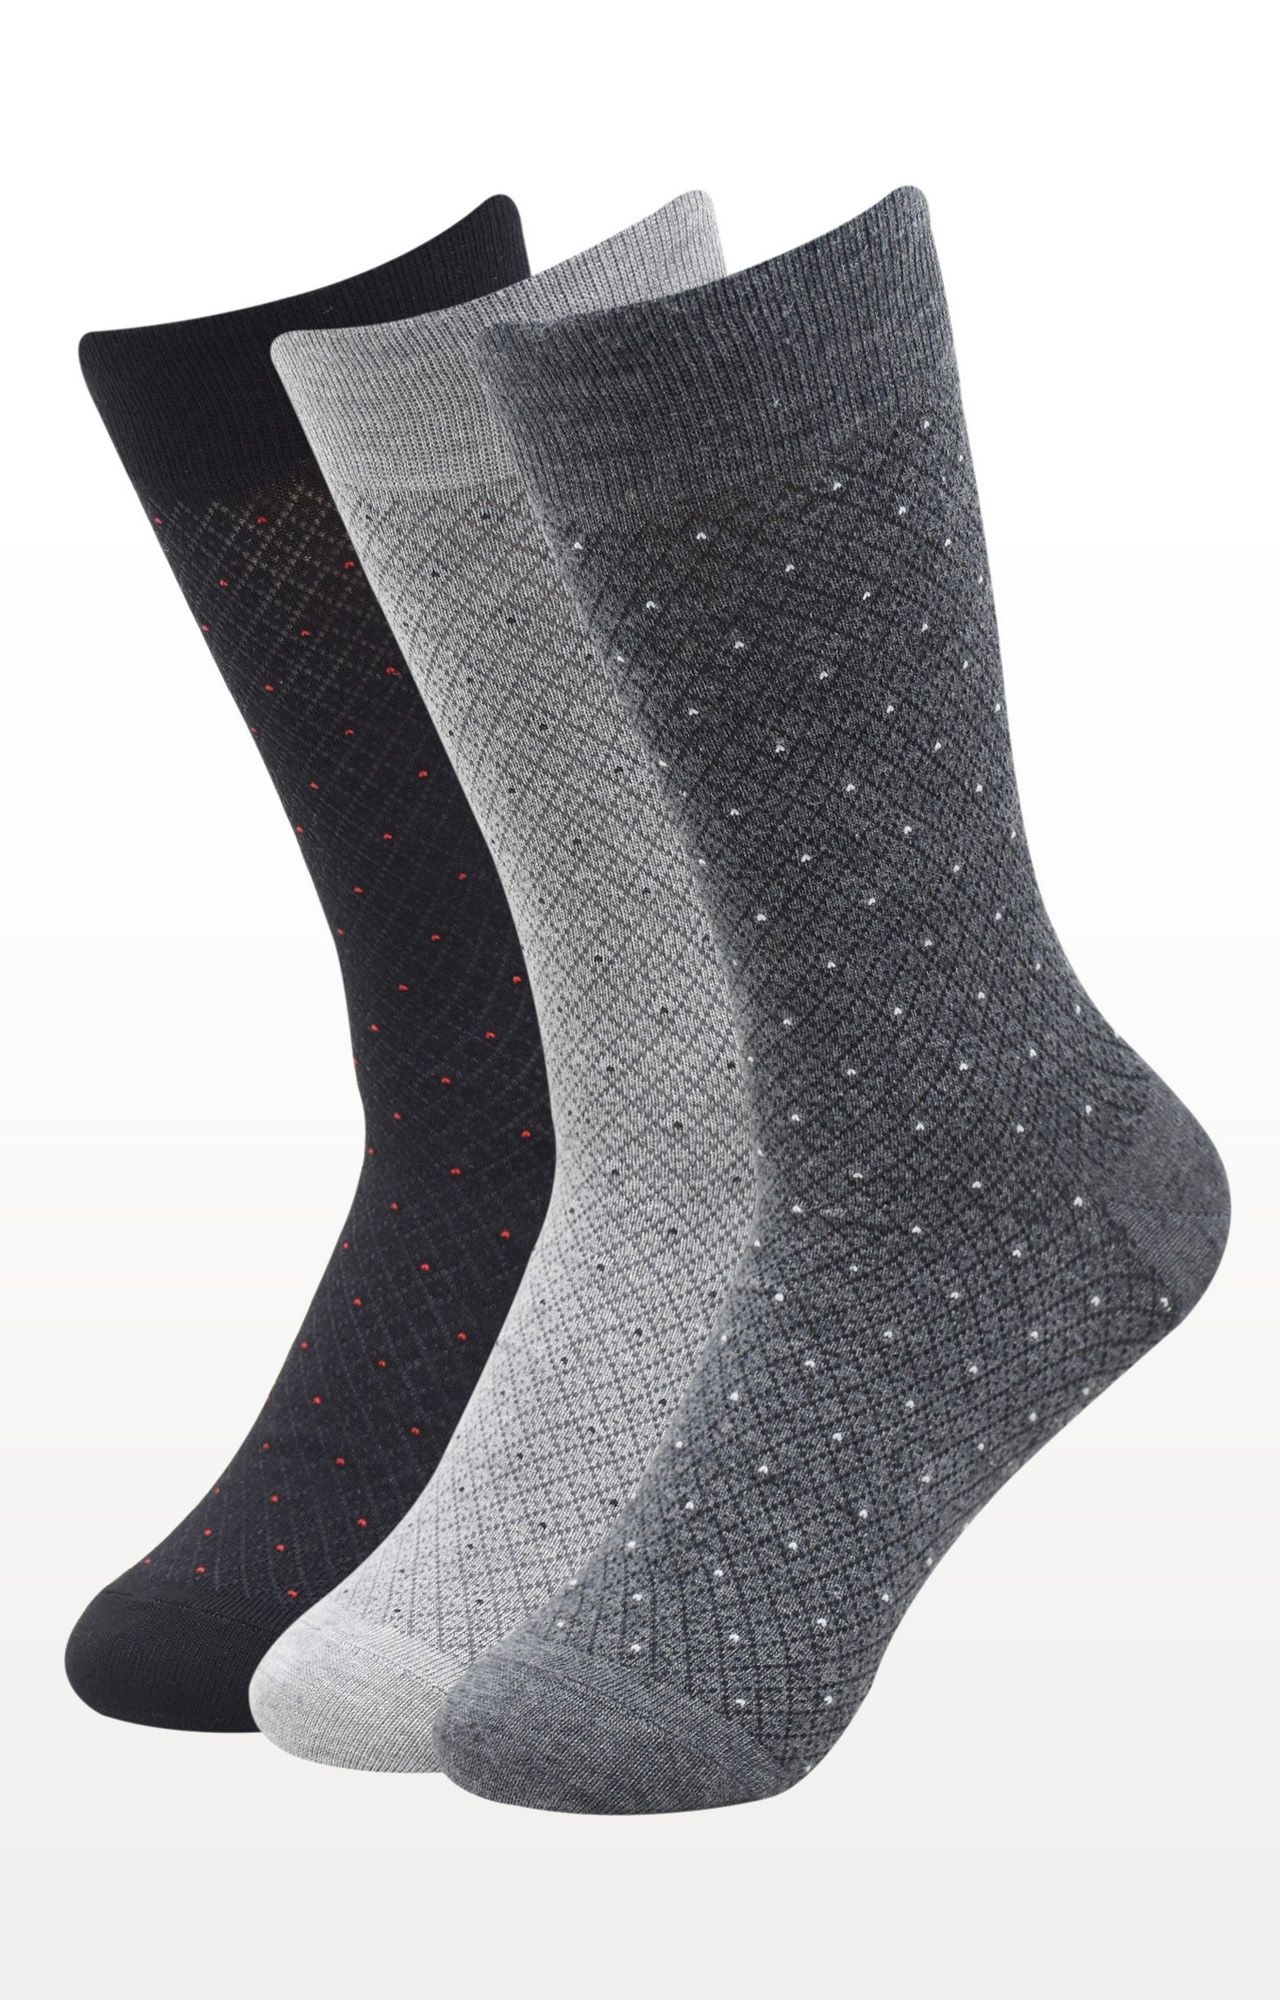 Multi-Coloured Printed Socks (Pack of 3)